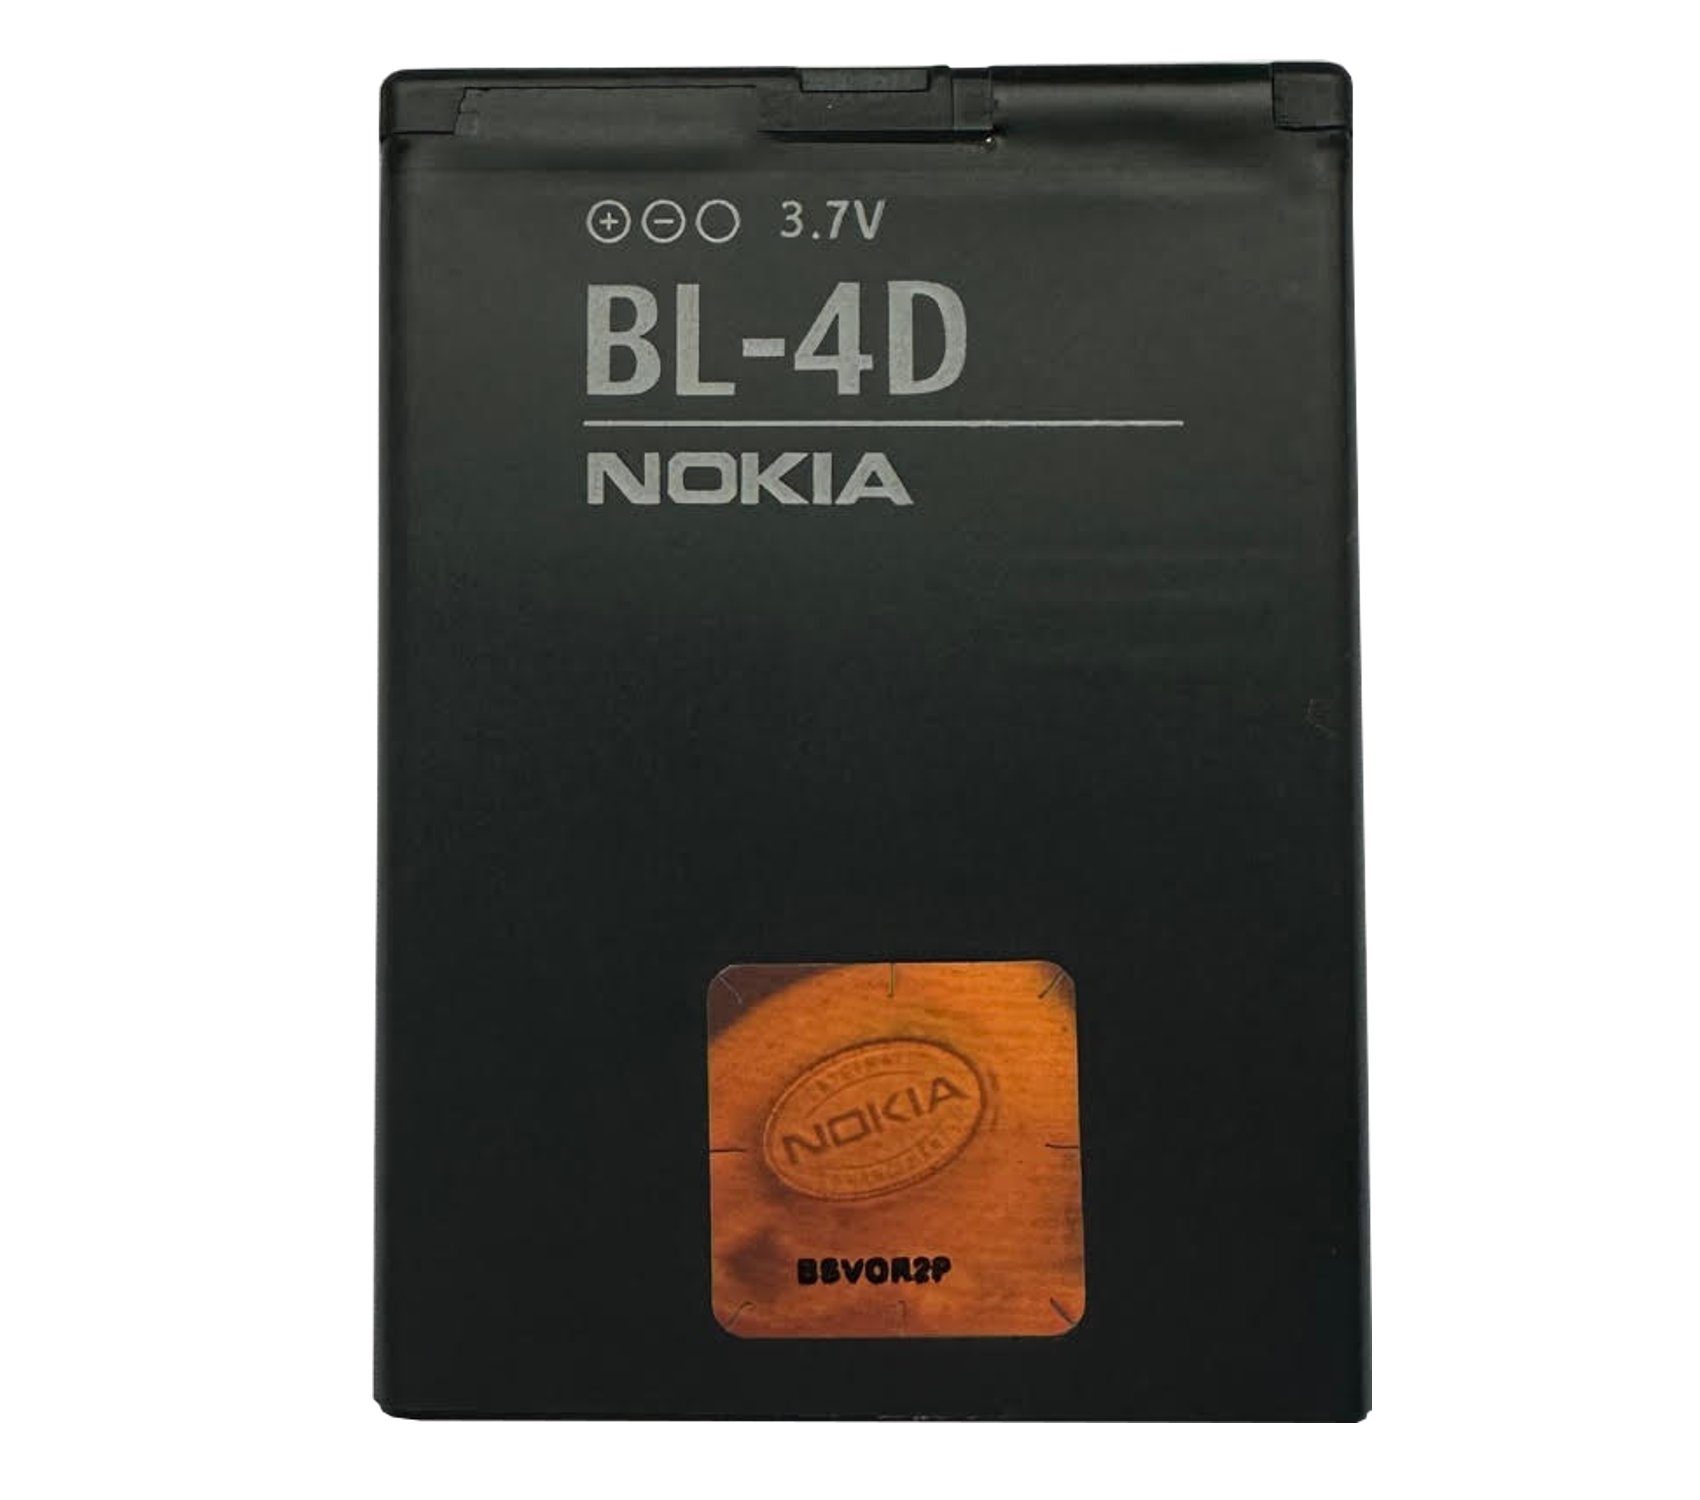 E7-00 N8 Laden, Nokia und Li-Ionen Nokia Schnelles BL-4D mAh N97 Nokia Original E5 Nokia BL-4D effizientes (3,7 1200 Überladungsschutz 1200 Akku V), Zellen, Handy-Akku mAh